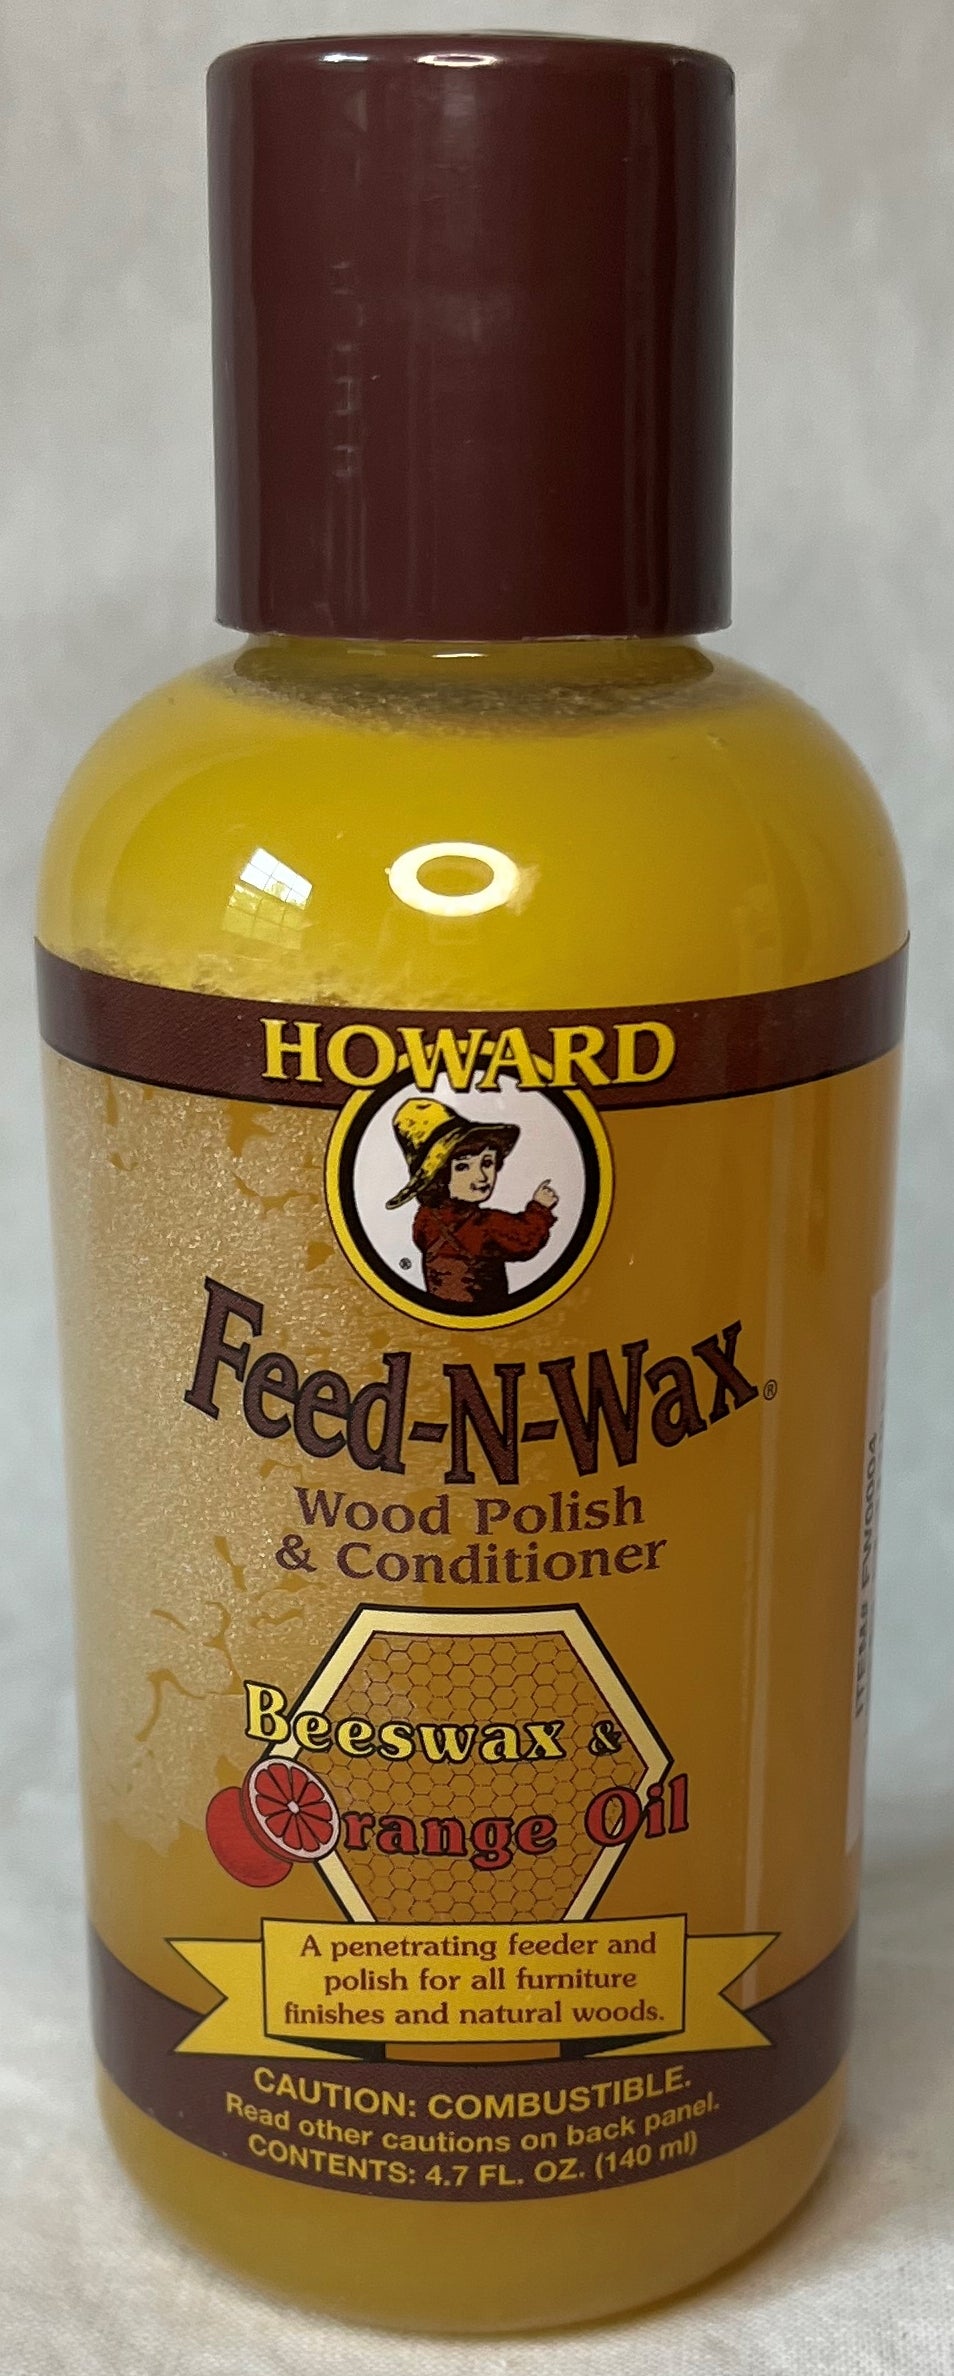 Howard FW0004 Feed-N-Wax Wood Polish and Conditioner, 4.7-Ounce